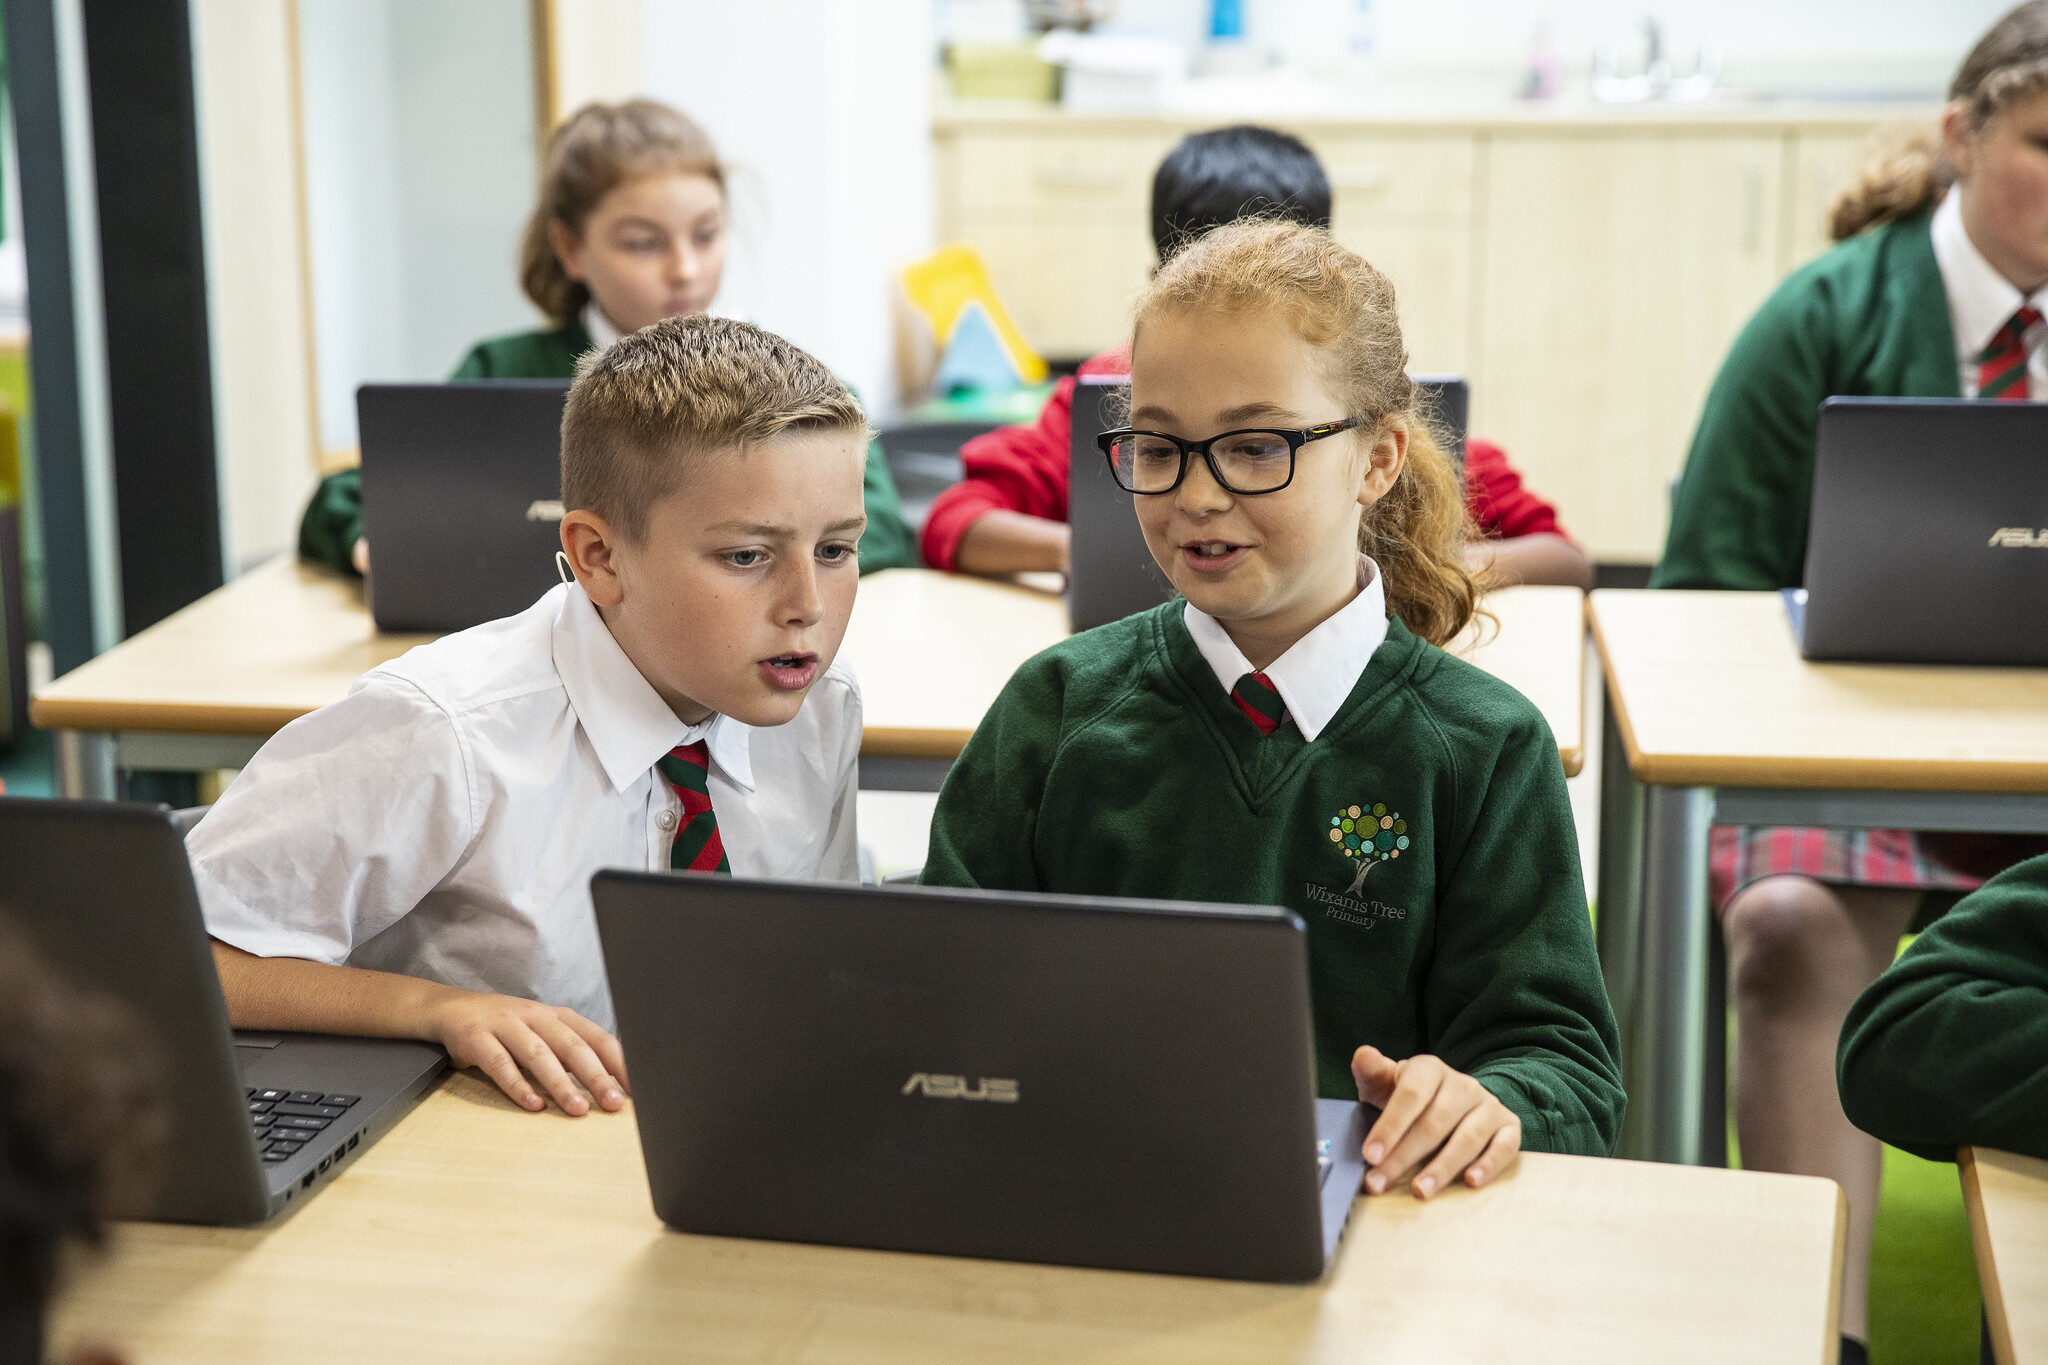 image-bcat-children-using-laptops-large